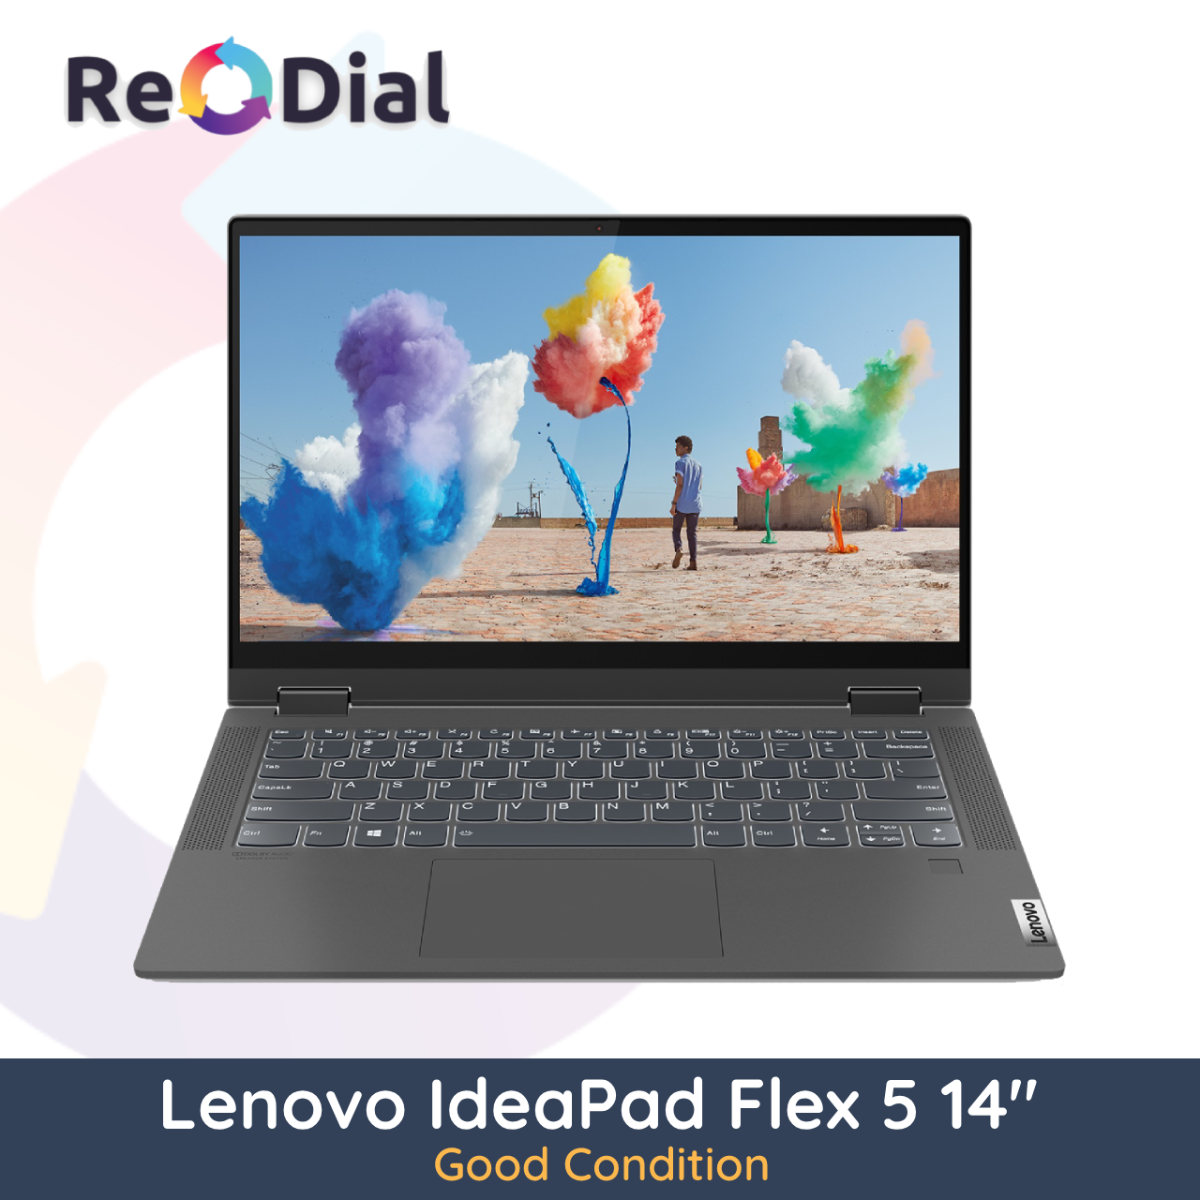 Lenovo IdeaPad Flex 5 14" (81X1) Laptop i3-1005G1 128GB 8GB RAM - Good Condition